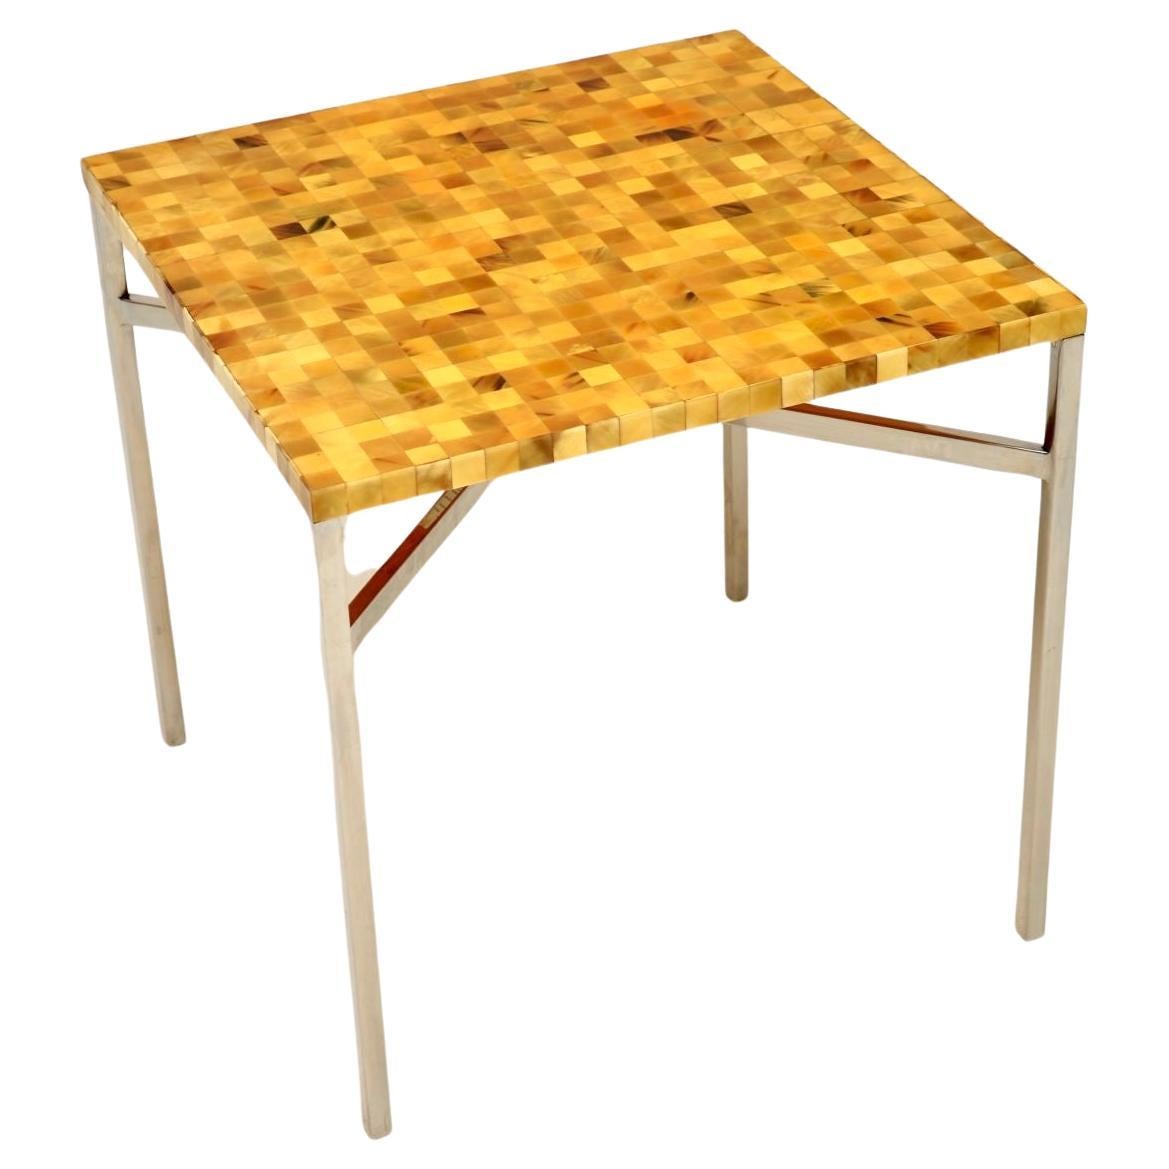 Vintage Brazilian Tiled Chrome Side Table